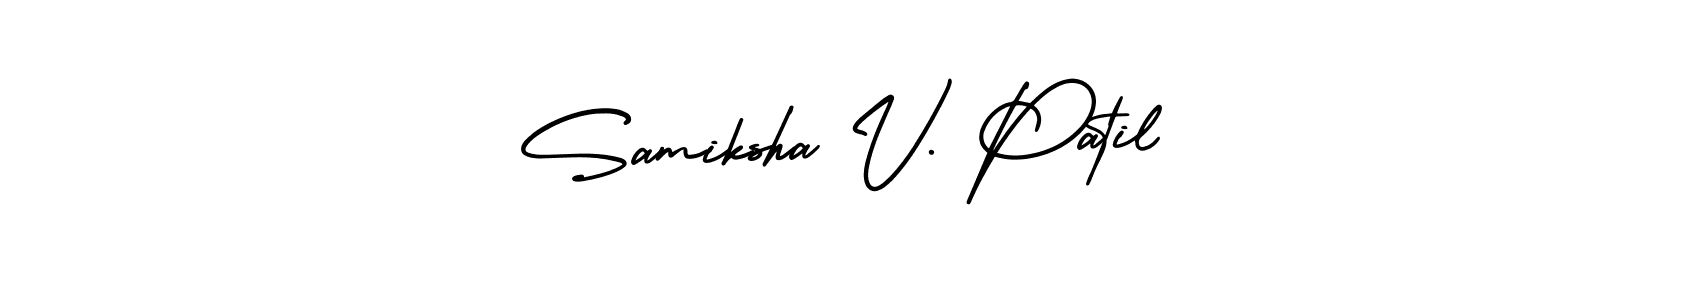 Best and Professional Signature Style for Samiksha V. Patil. AmerikaSignatureDemo-Regular Best Signature Style Collection. Samiksha V. Patil signature style 3 images and pictures png